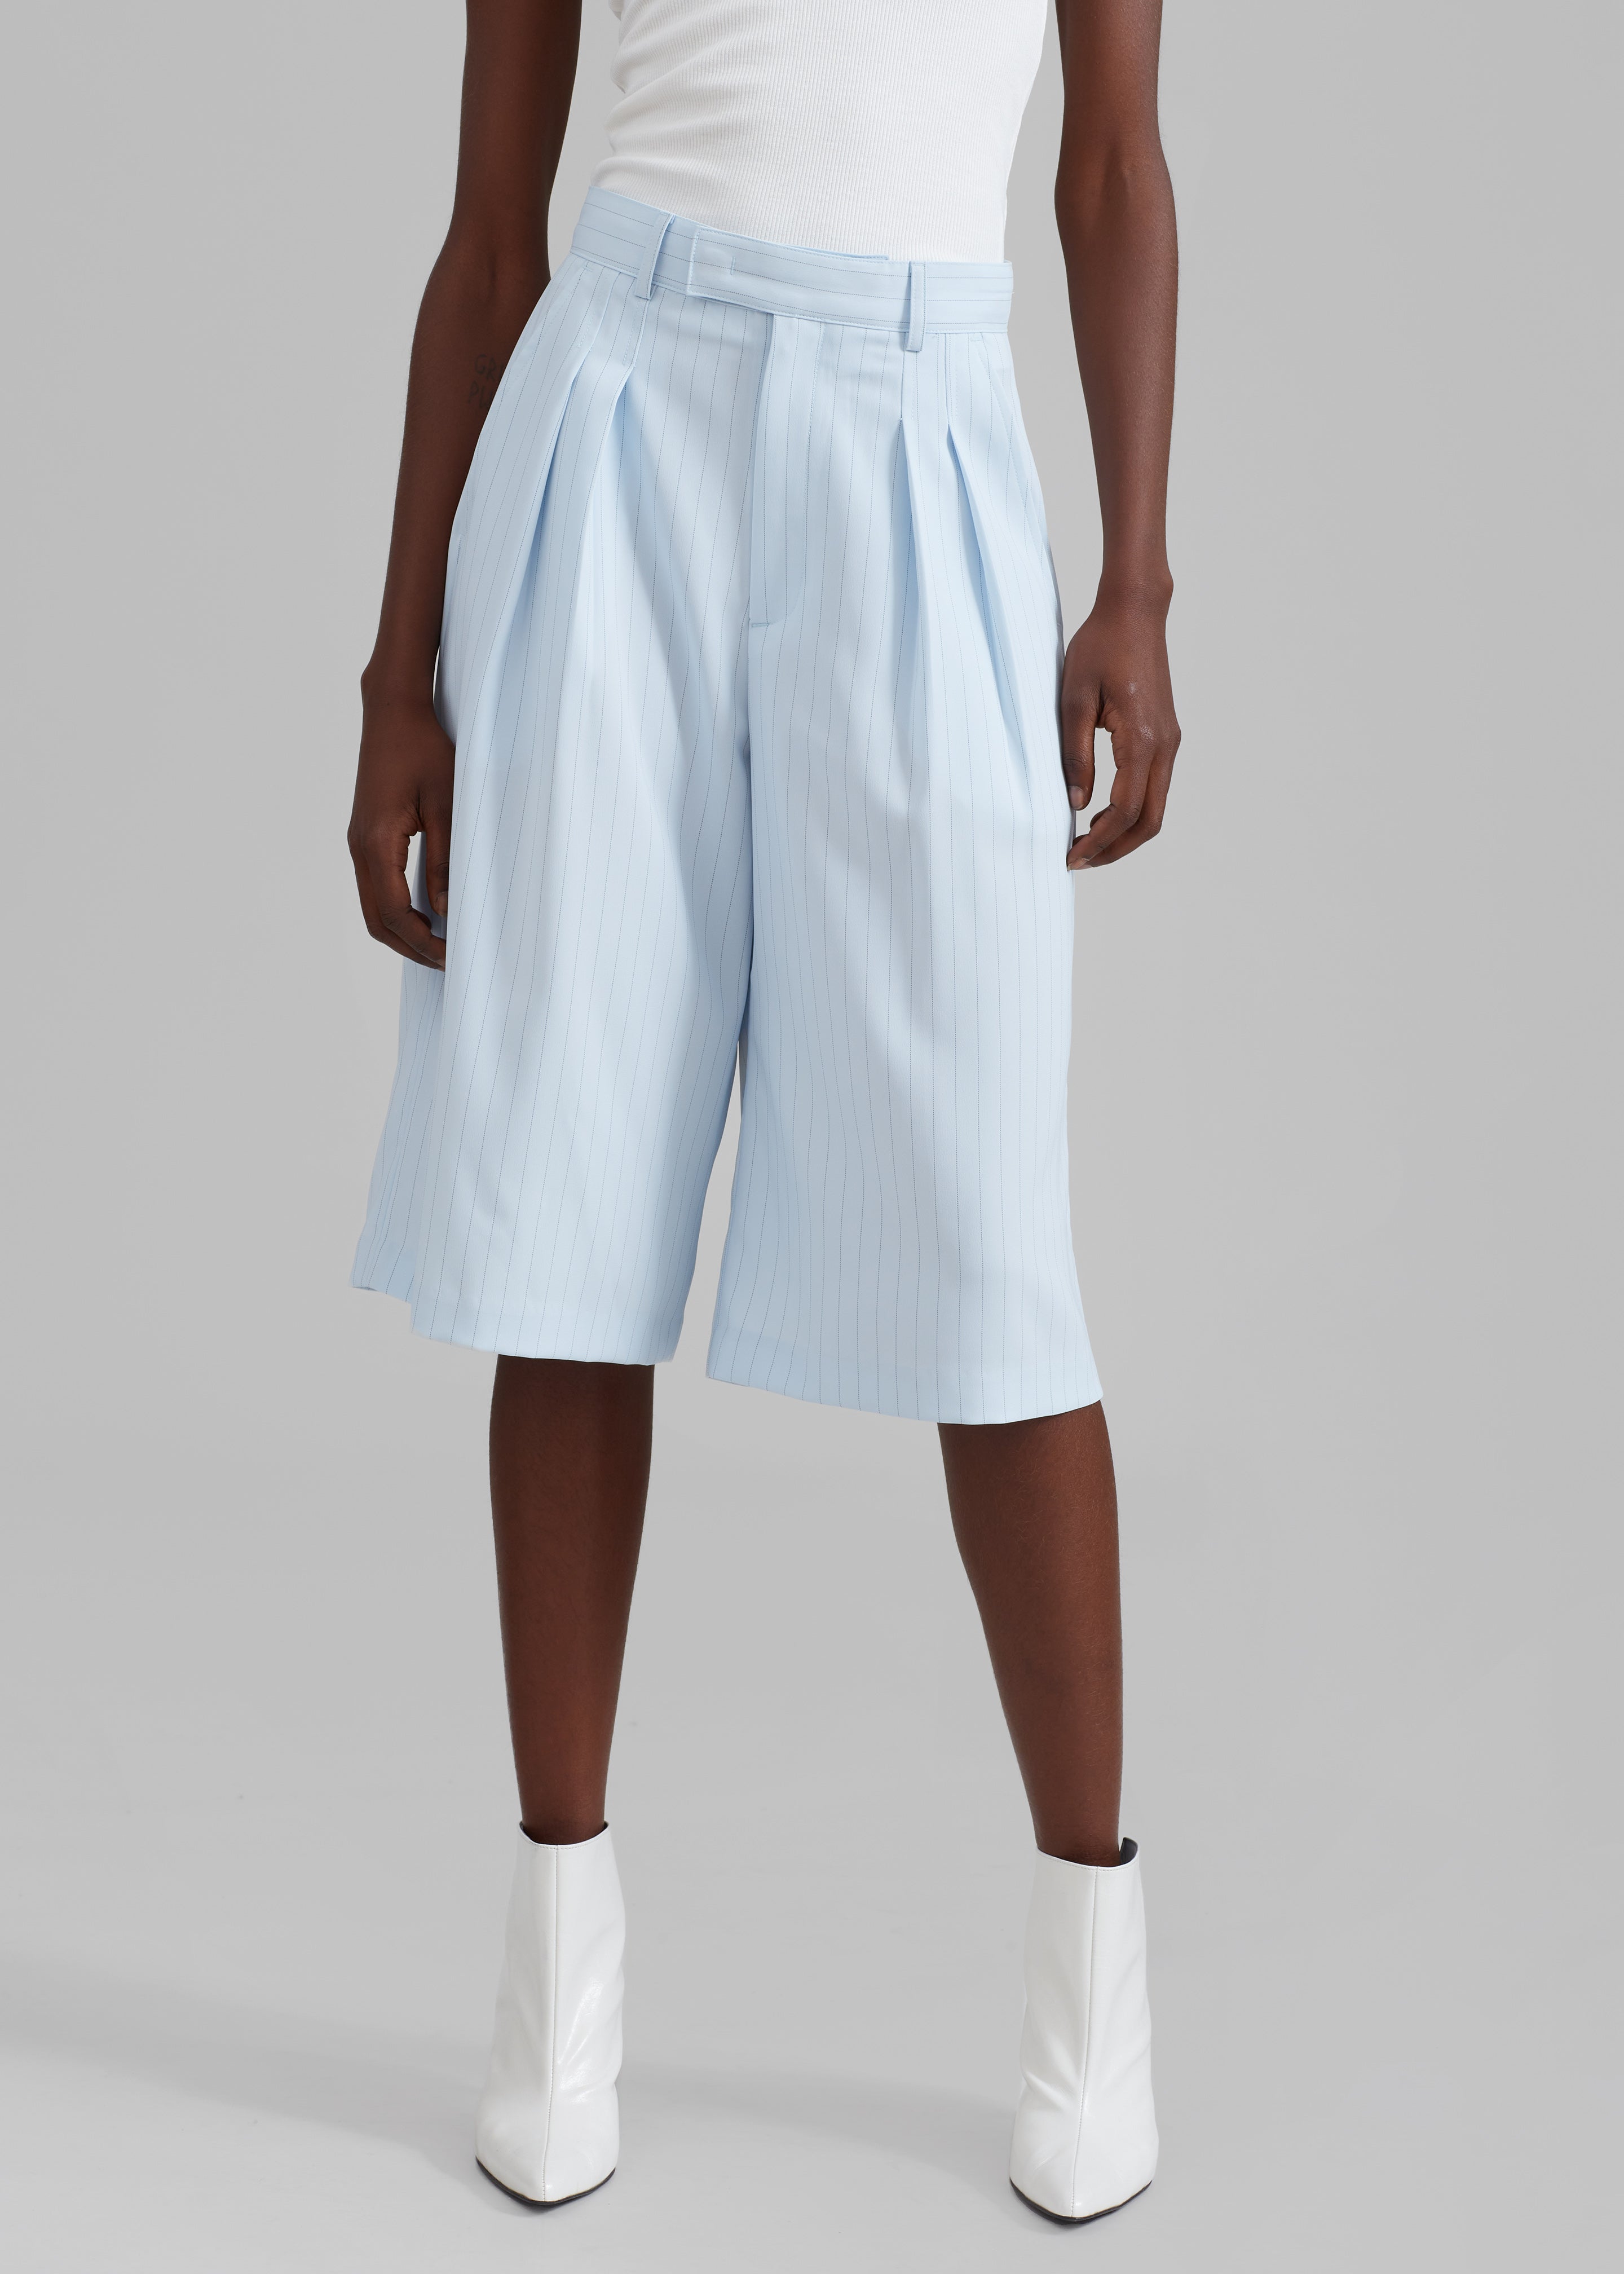 Vivian Fluid Pleated Bermuda Shorts - Blue Pinstripe - 5